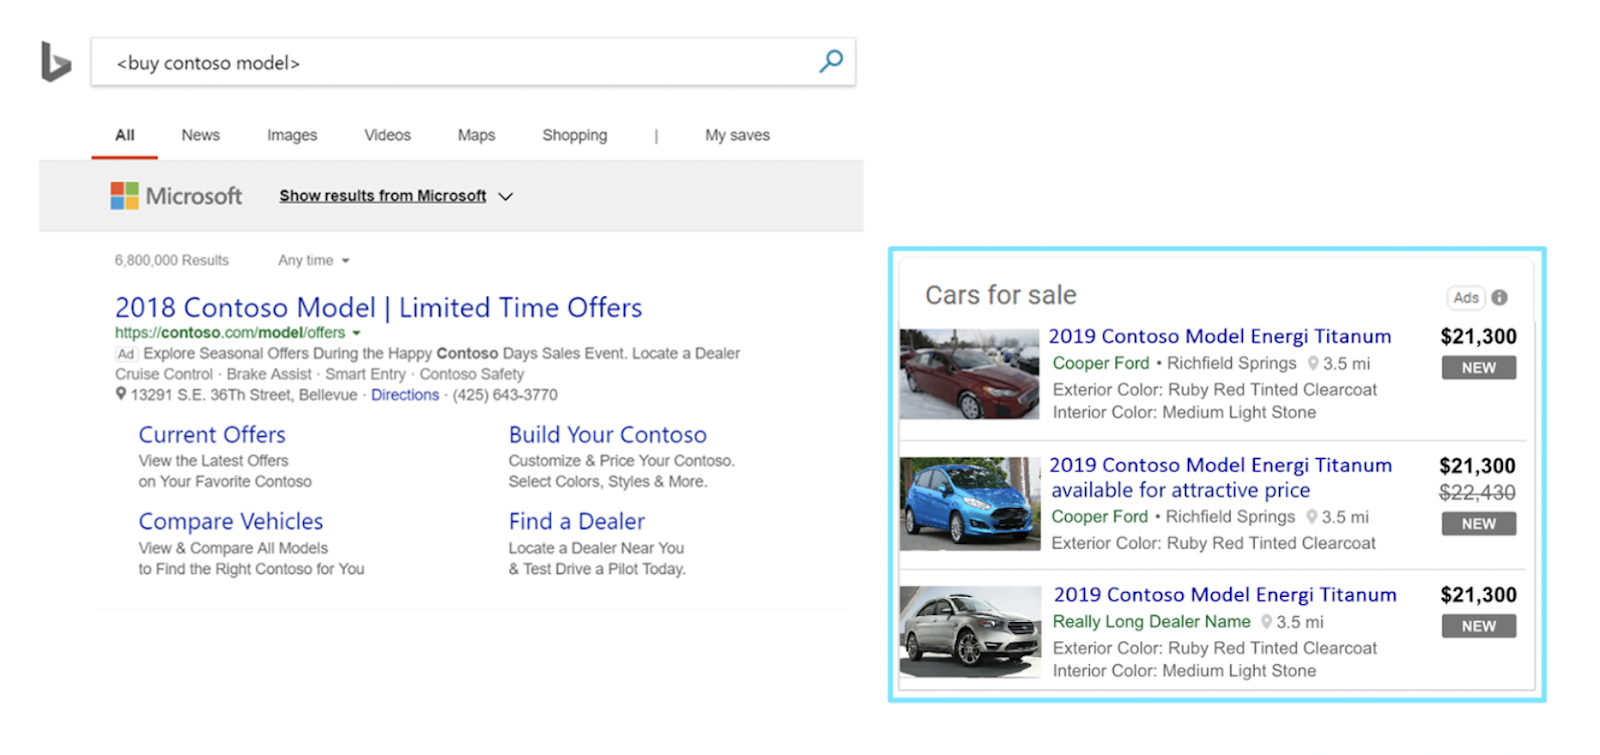 Microsoft auto ads, Verizon Media shopper data: Monday’s daily brief | DeviceDaily.com